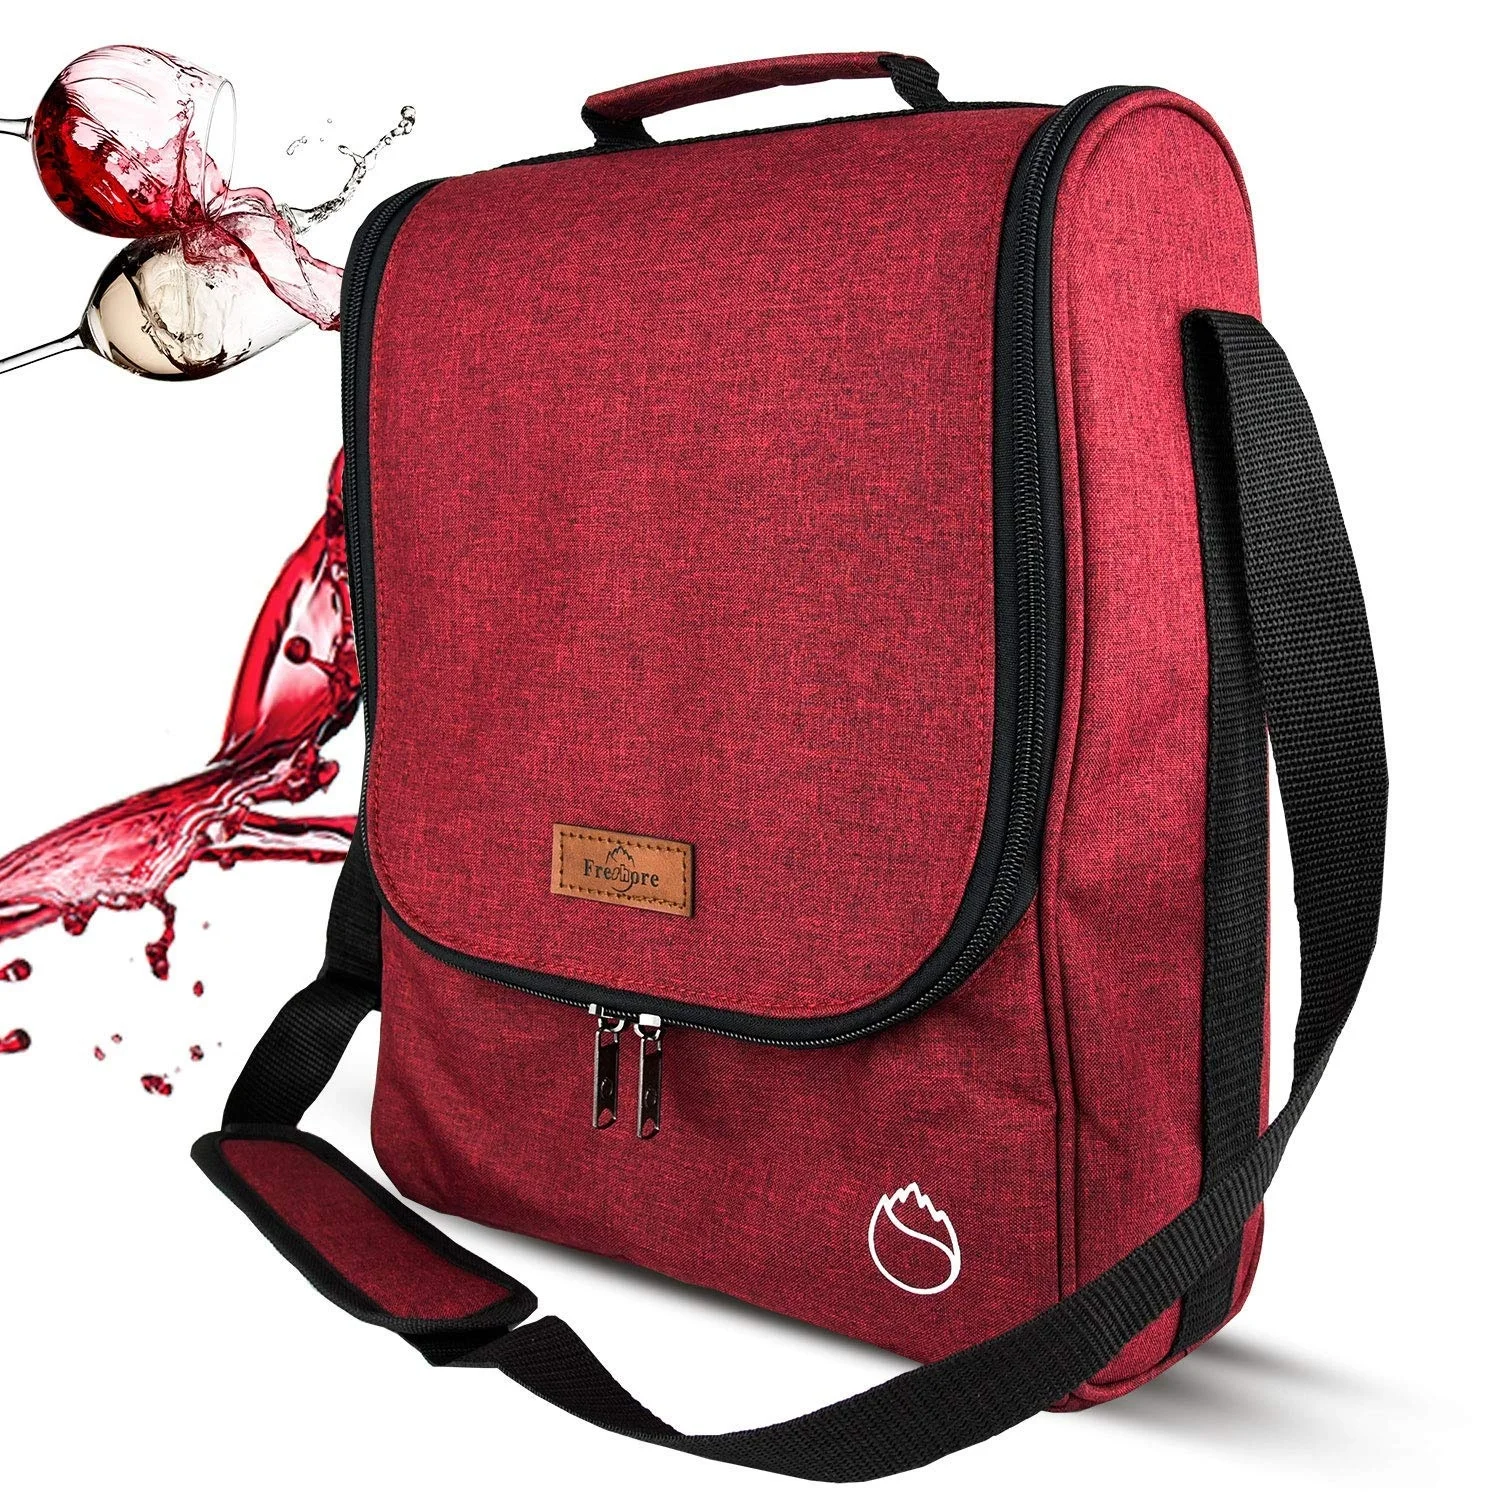 

3 Bottles Insulated Wine Cooler Bag Portable Wine Carrier Tote Bag With Adjustable Shoulder Strap For Travelling and Picnic